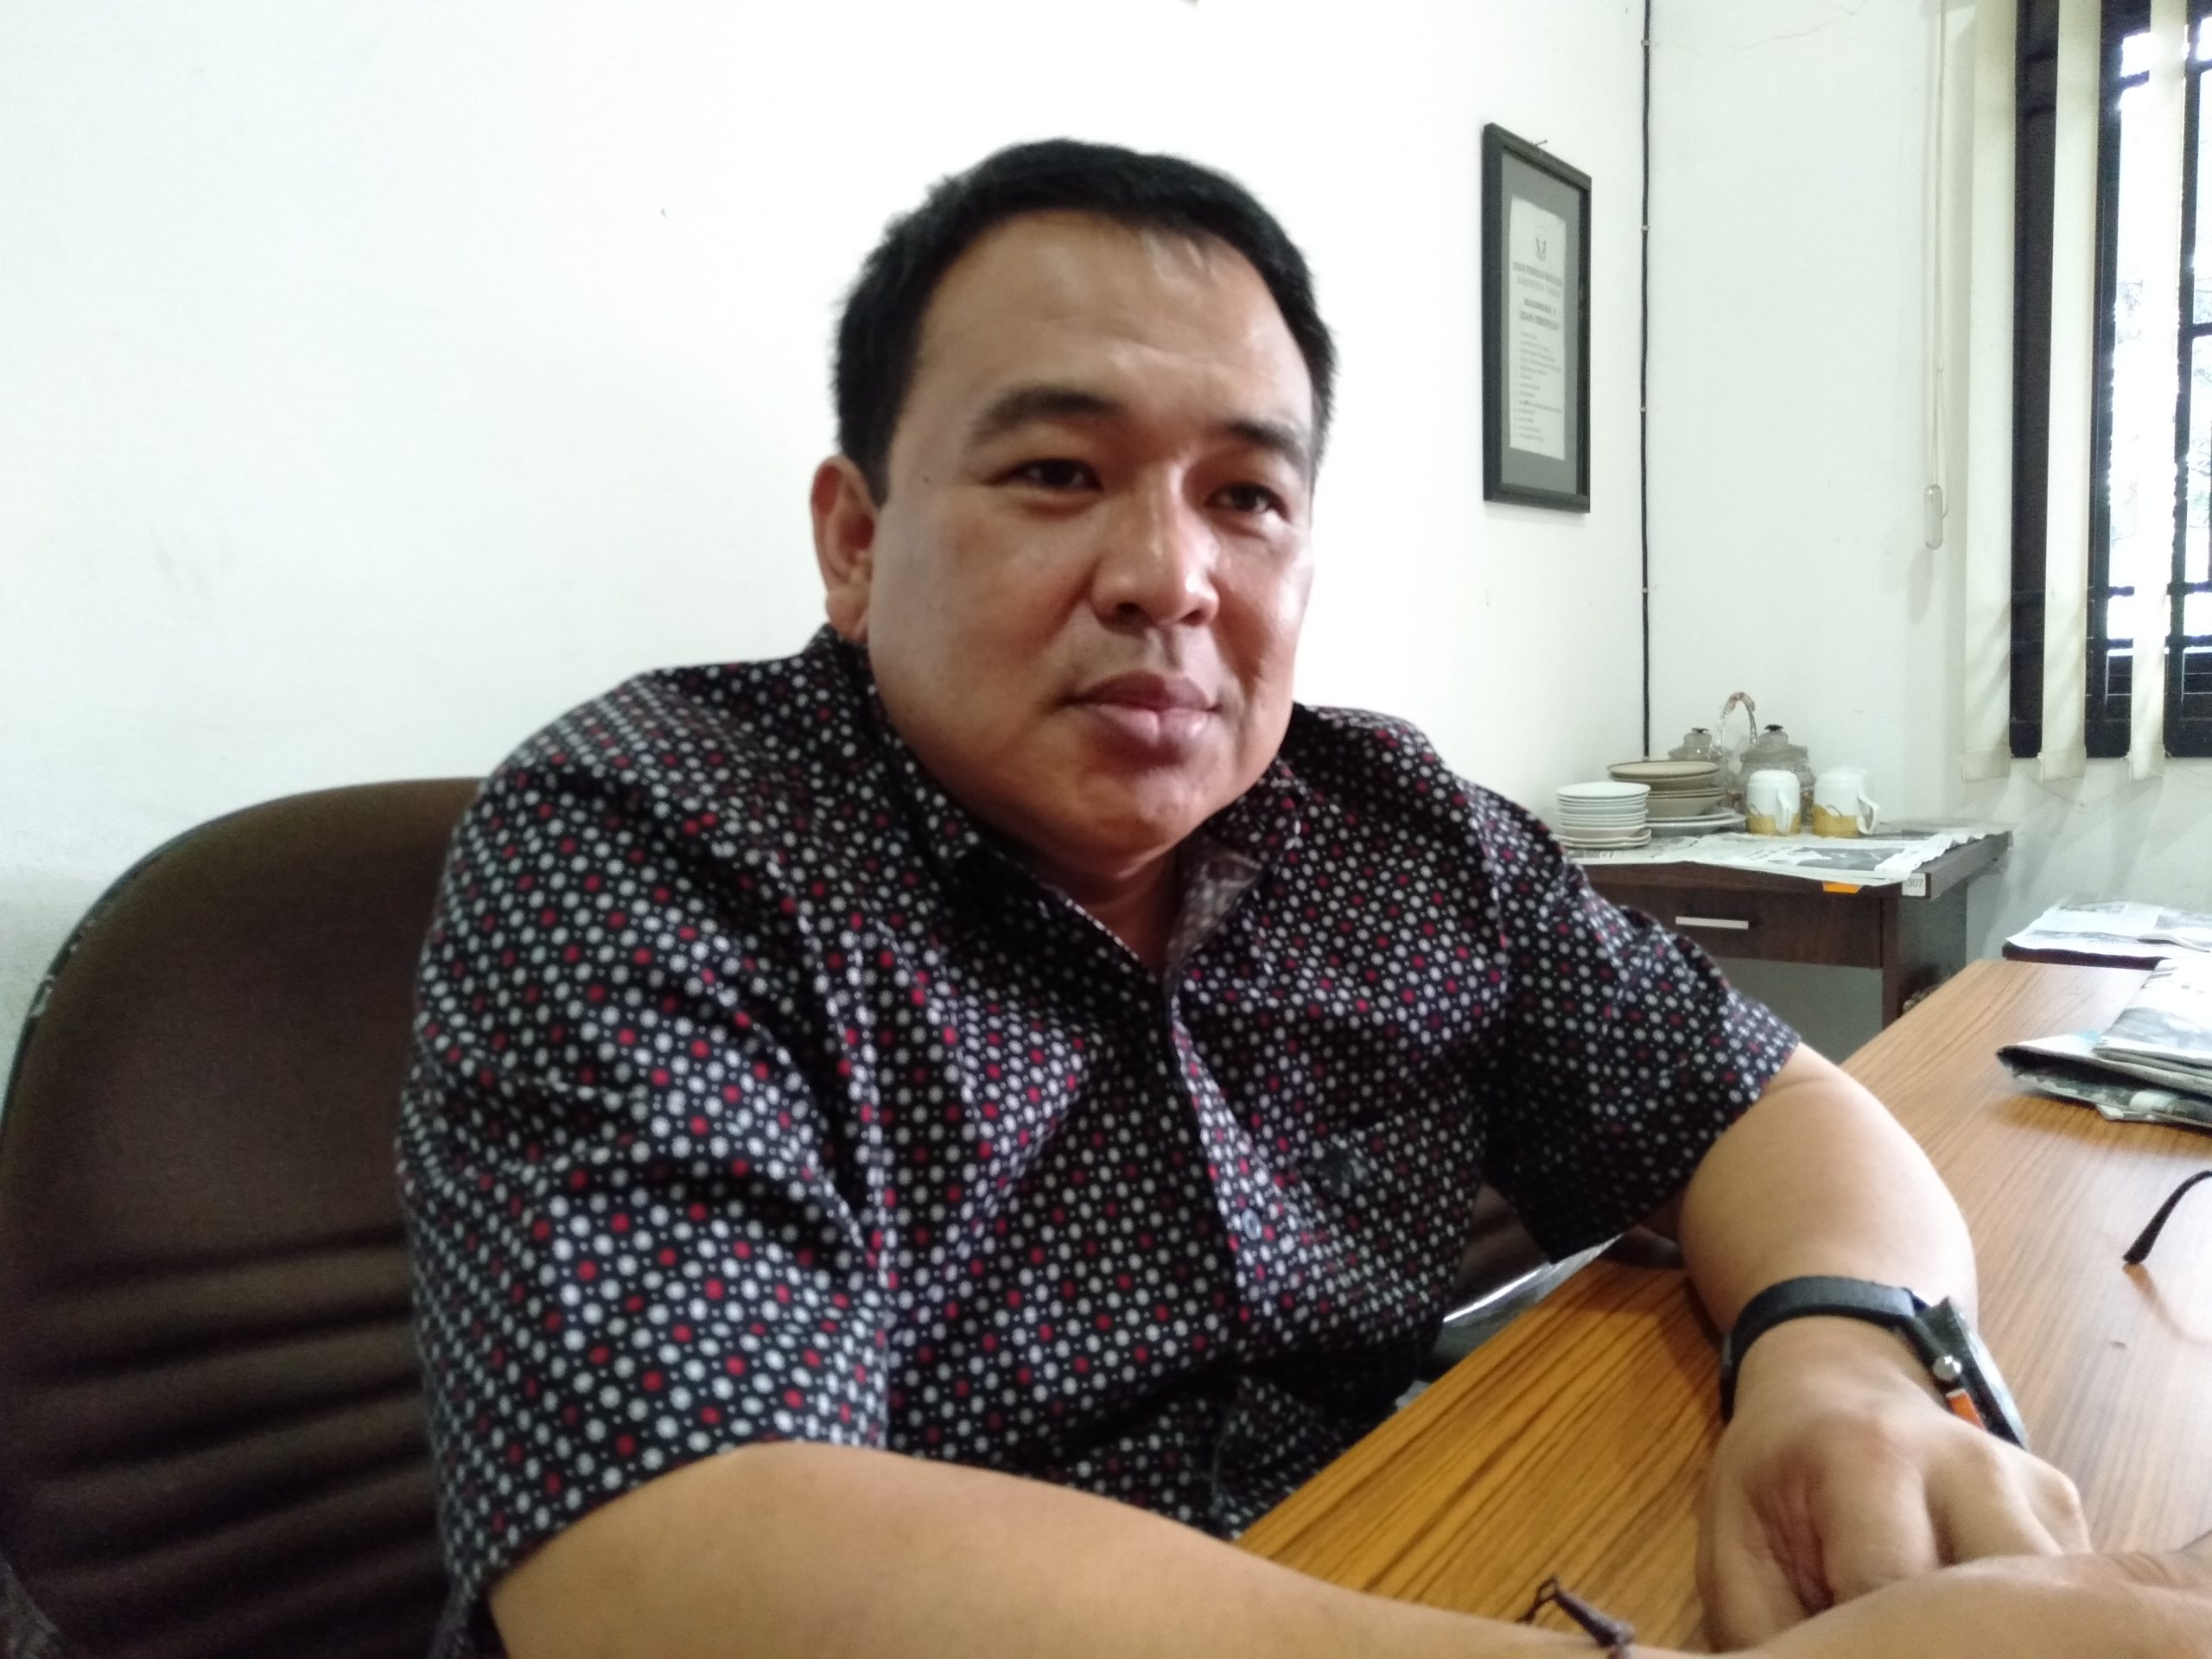 Kirim Nota Dinas, Komisi A Minta Plt Bupati Cianjur Tutup Batching Plant tak Berizin